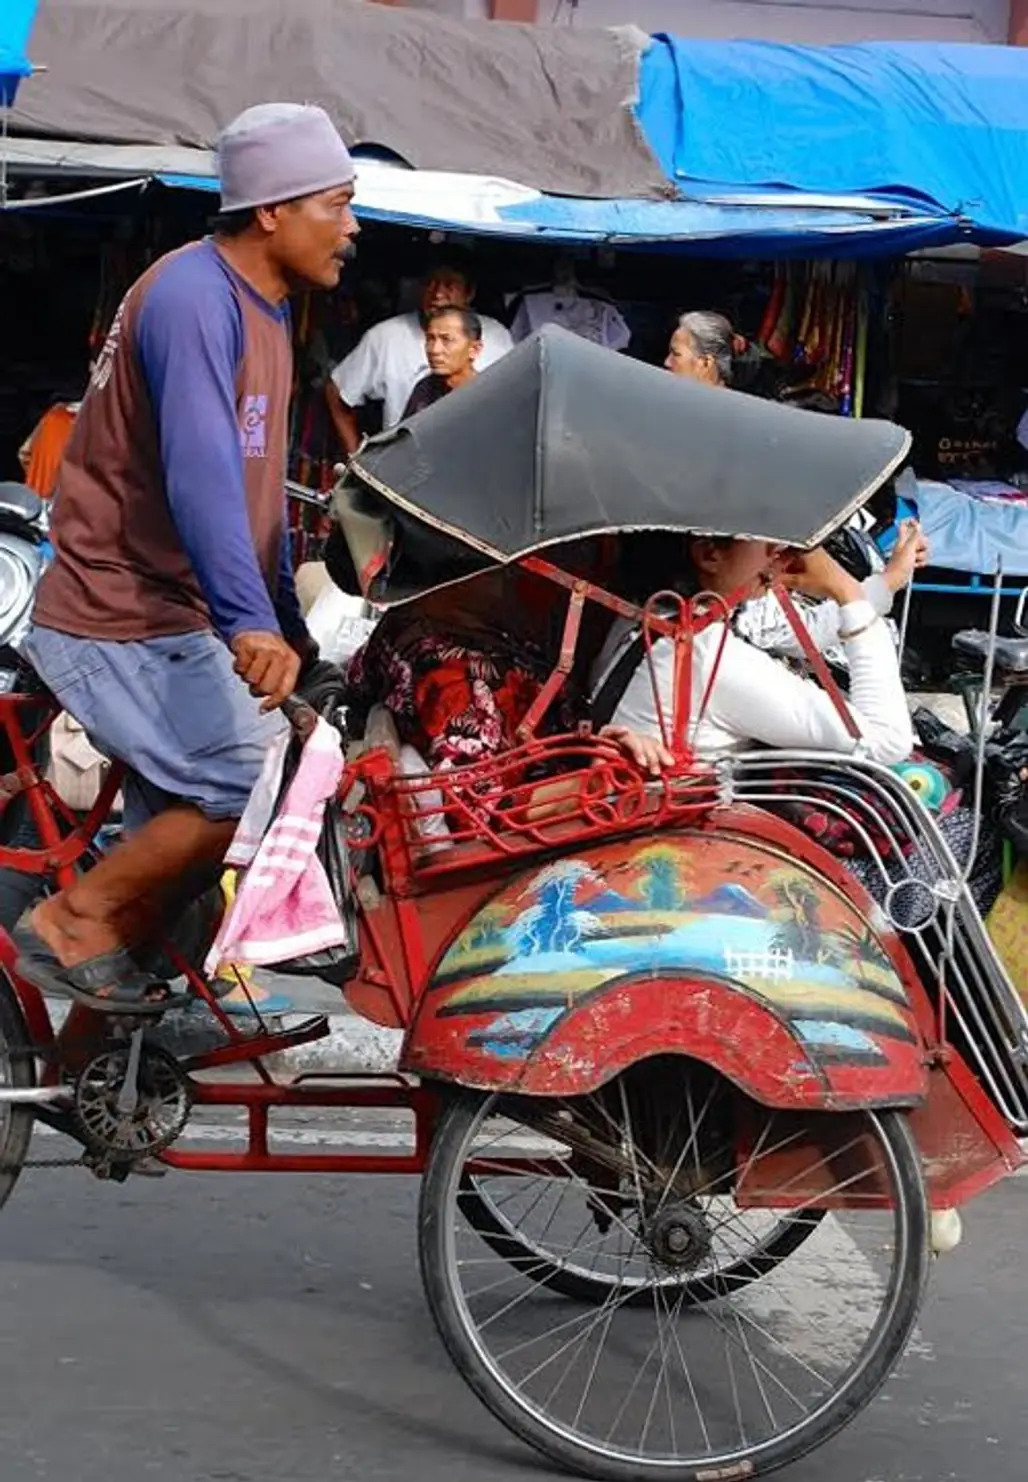 Ride in a Pedicab or Horse Drawn Carriage in Yogyakarta, Indonesia